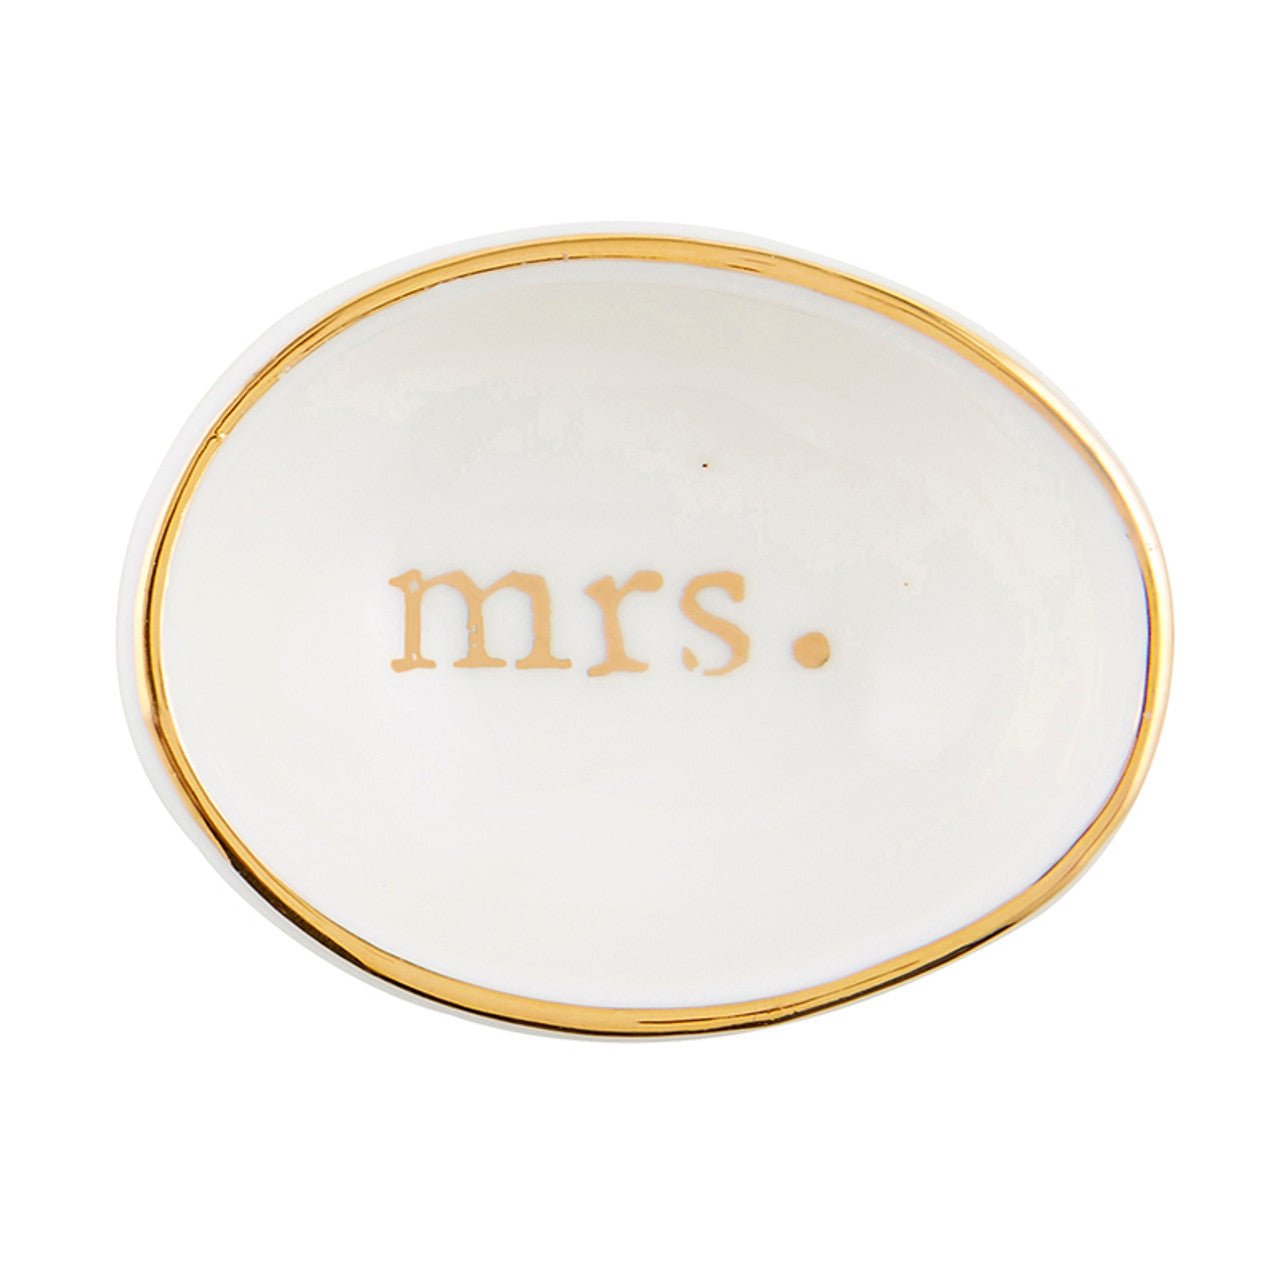 Mrs. Ring Dish | Small Trinket Catchall Bowl